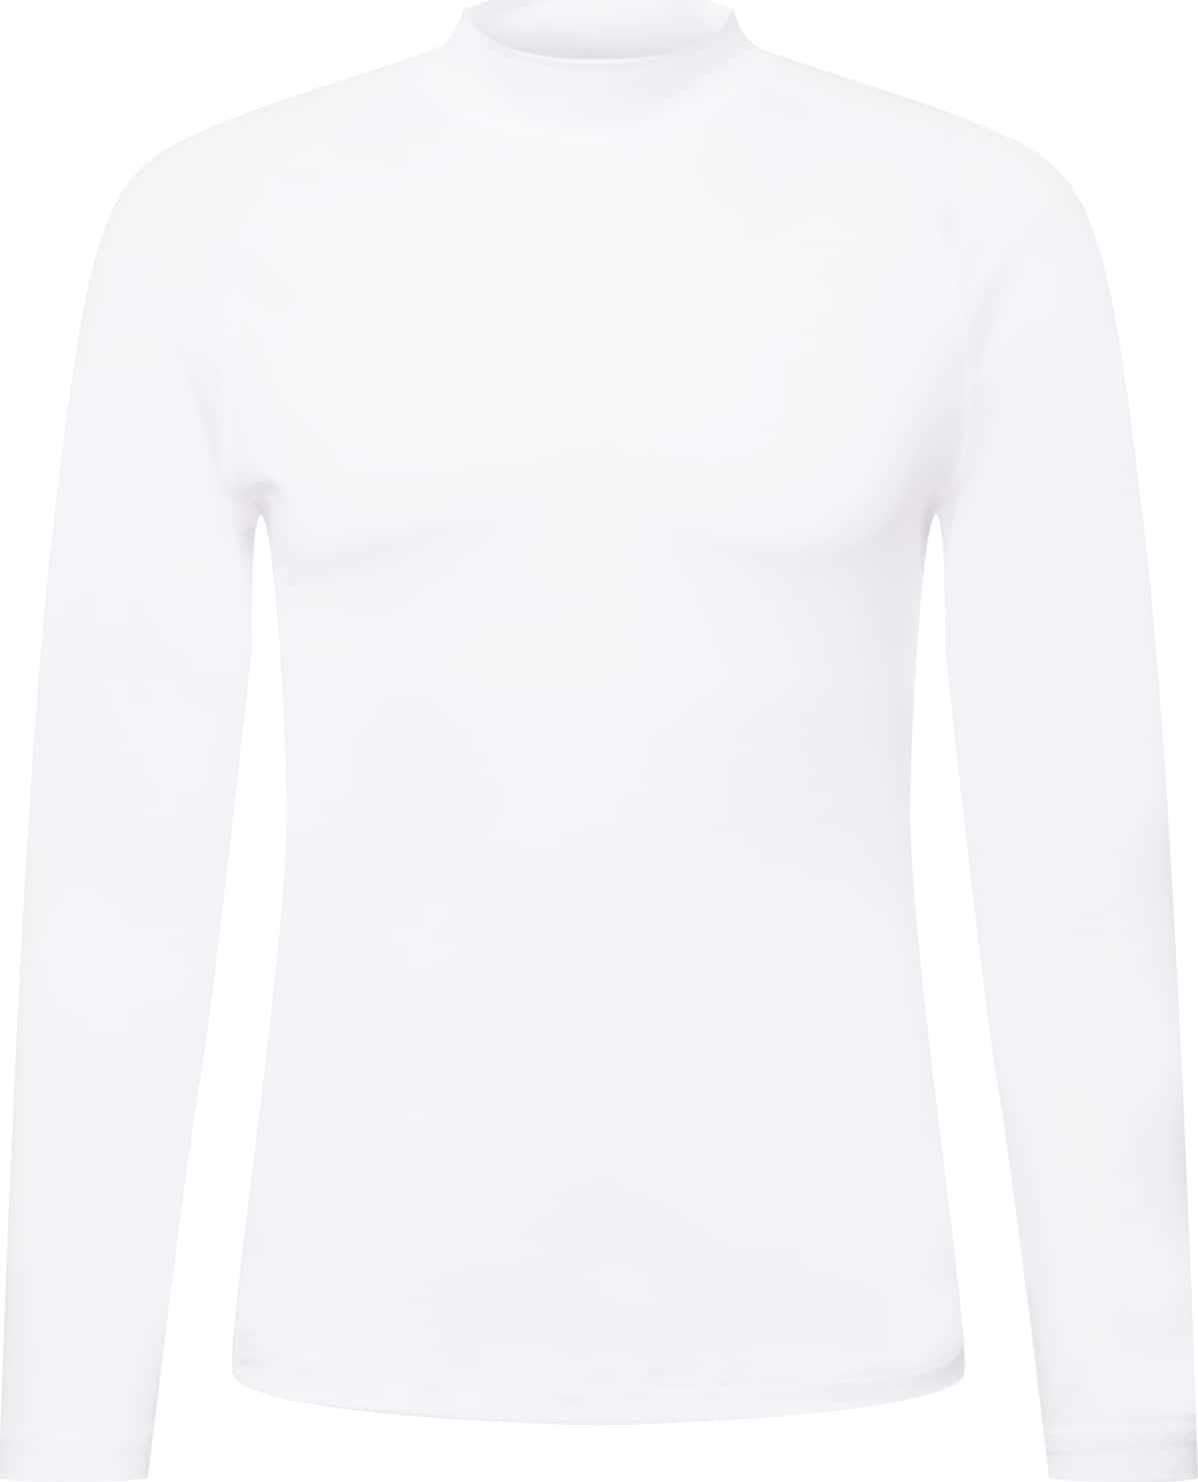 PUMA Funkční tričko bílá